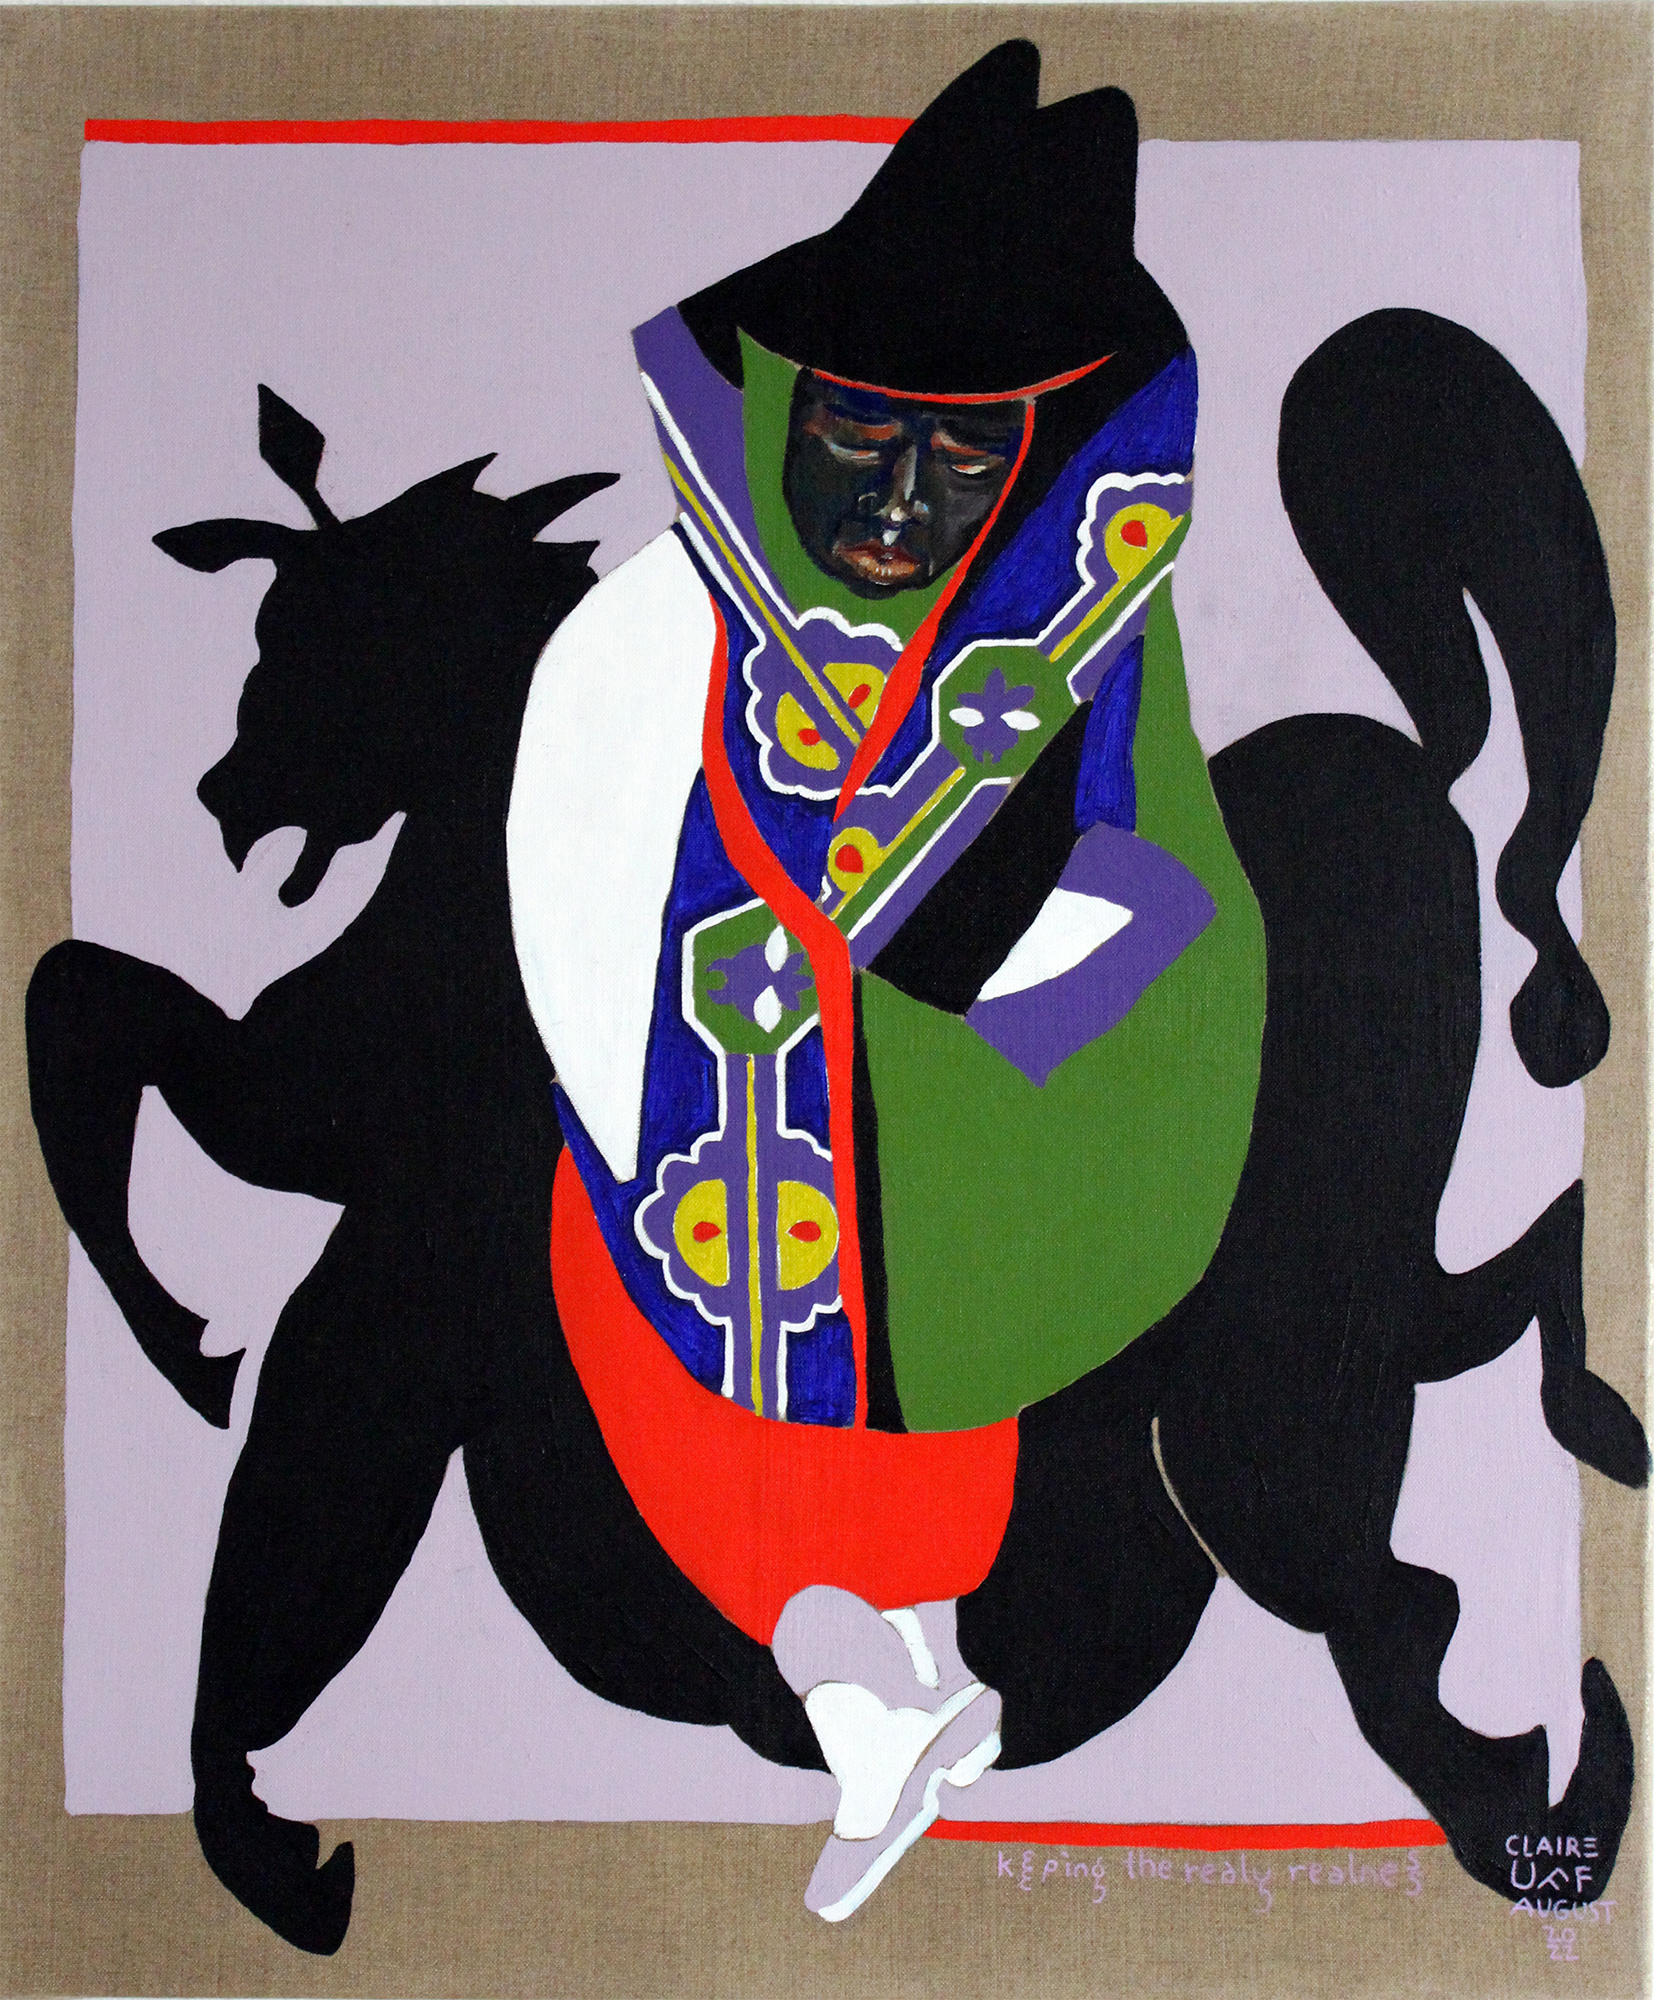 Keeping the realy realness / Claire Uff / Malerei / Cowboy / Muster / Portrait / Hut / Cowboyhut / horse / Pferd / Grün / green / violett / africa / red / black / contemporaryart / contemporarypainting / art / berlin artist / painting / acrylic